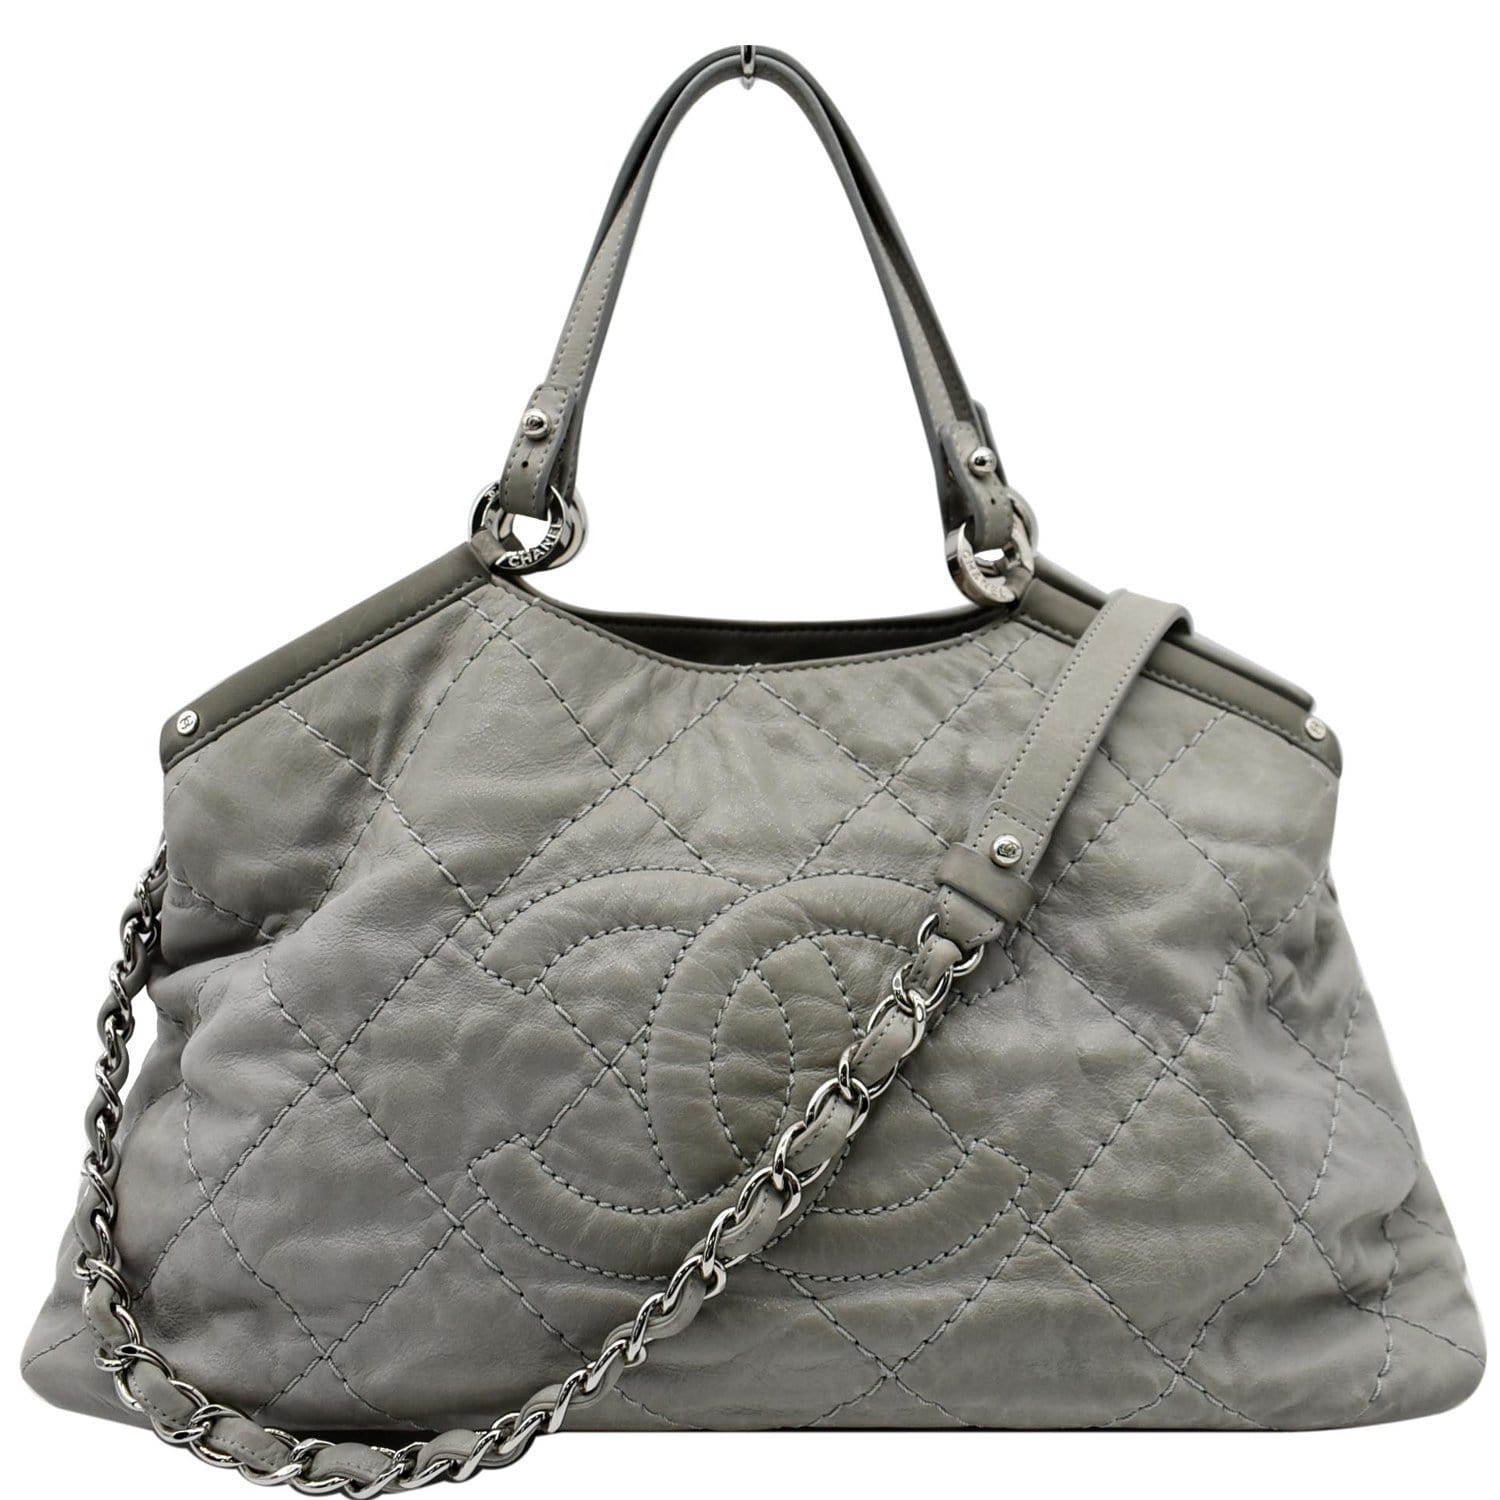 CHANEL Wild Stitch Leather Hand Bag A14692 SKU: 36880-12